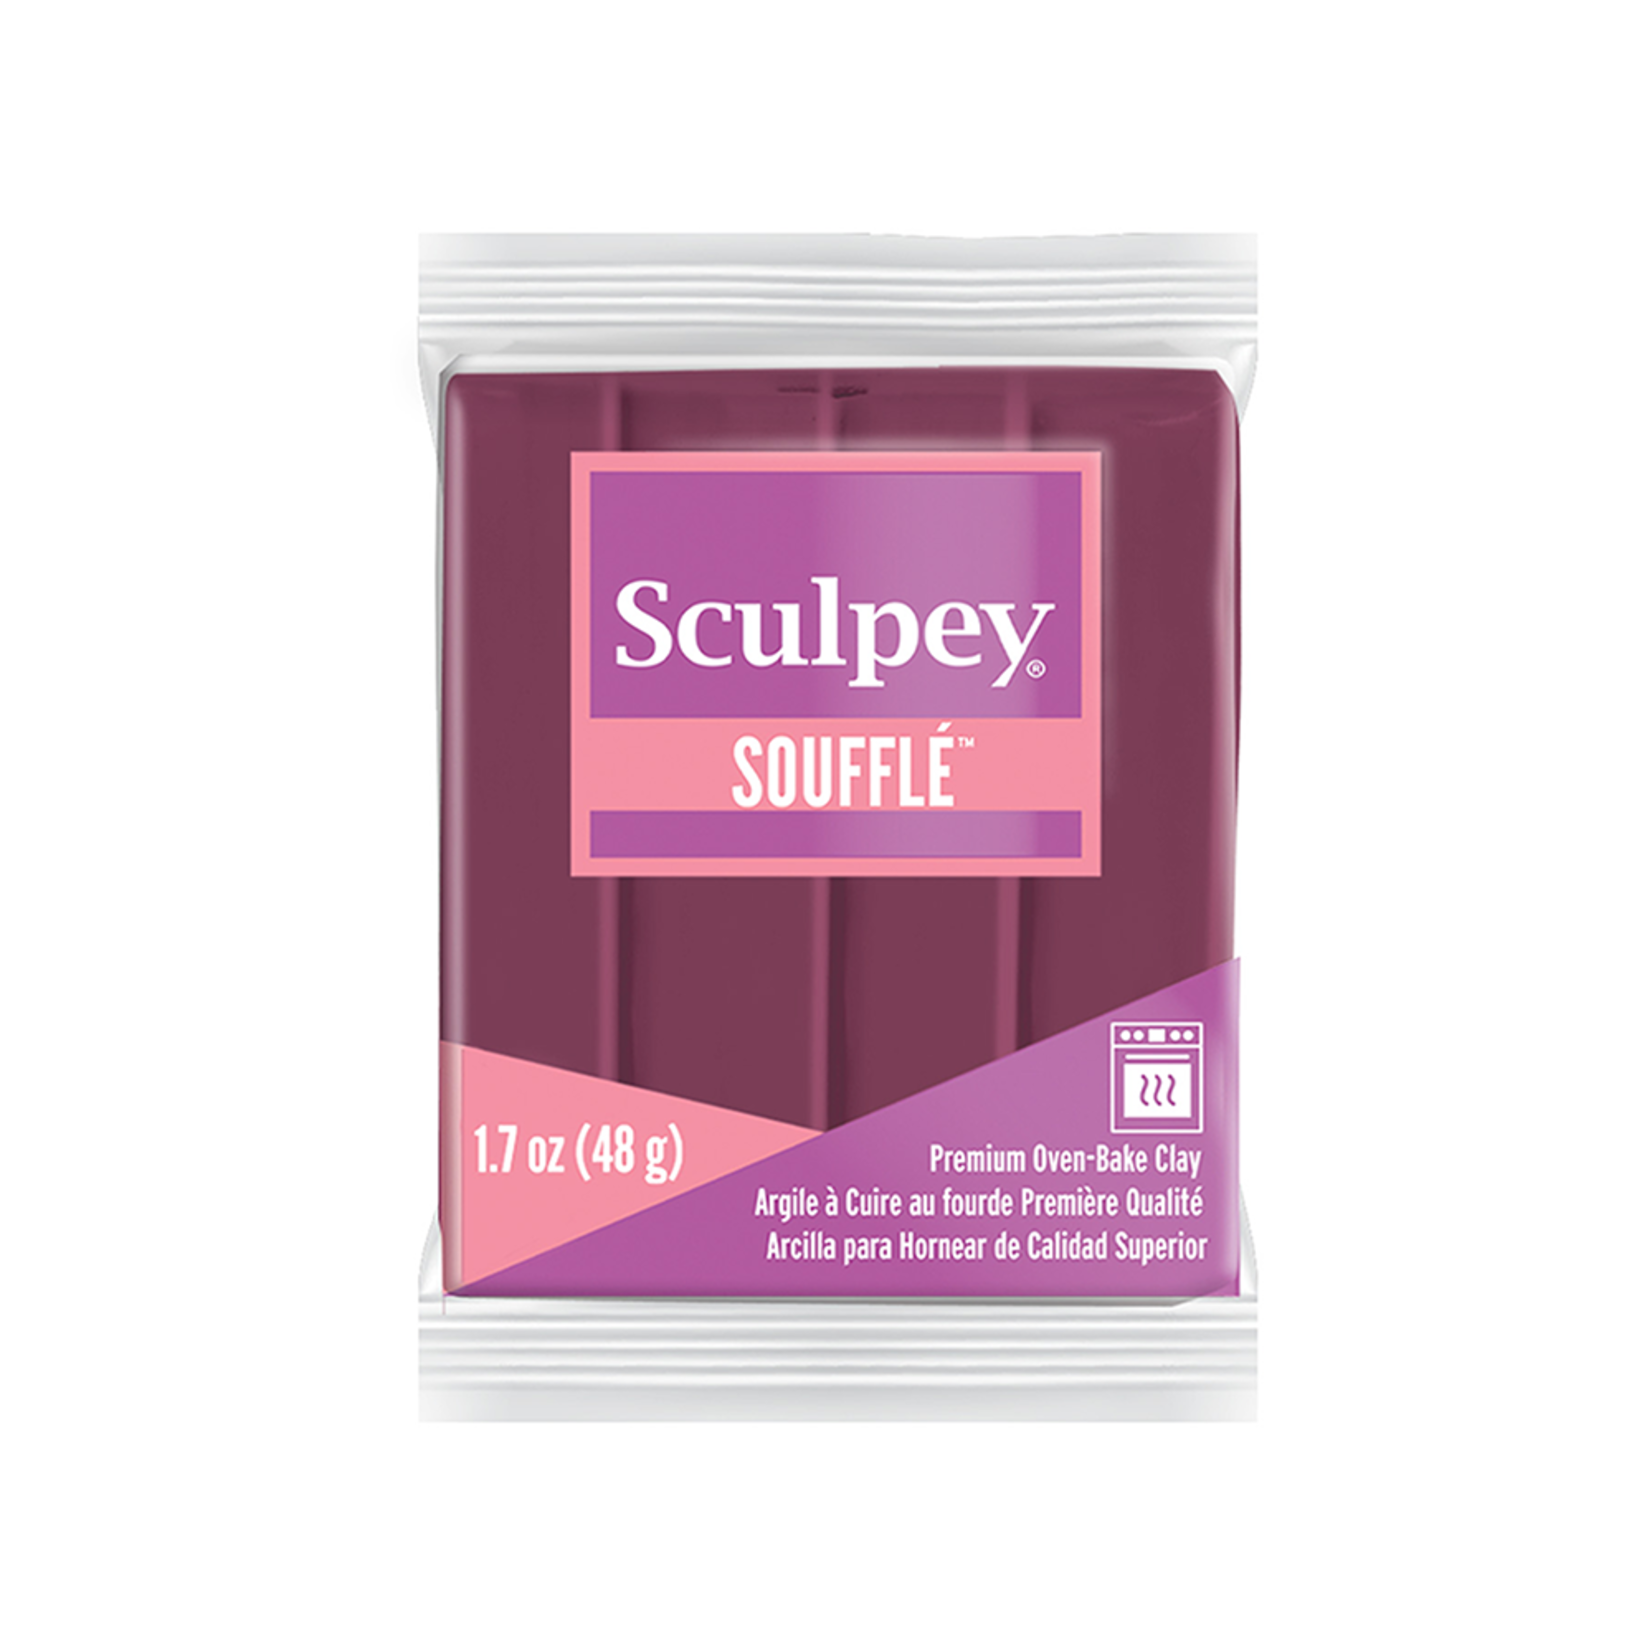 Sculpey Sculpey Souffle Cabernet